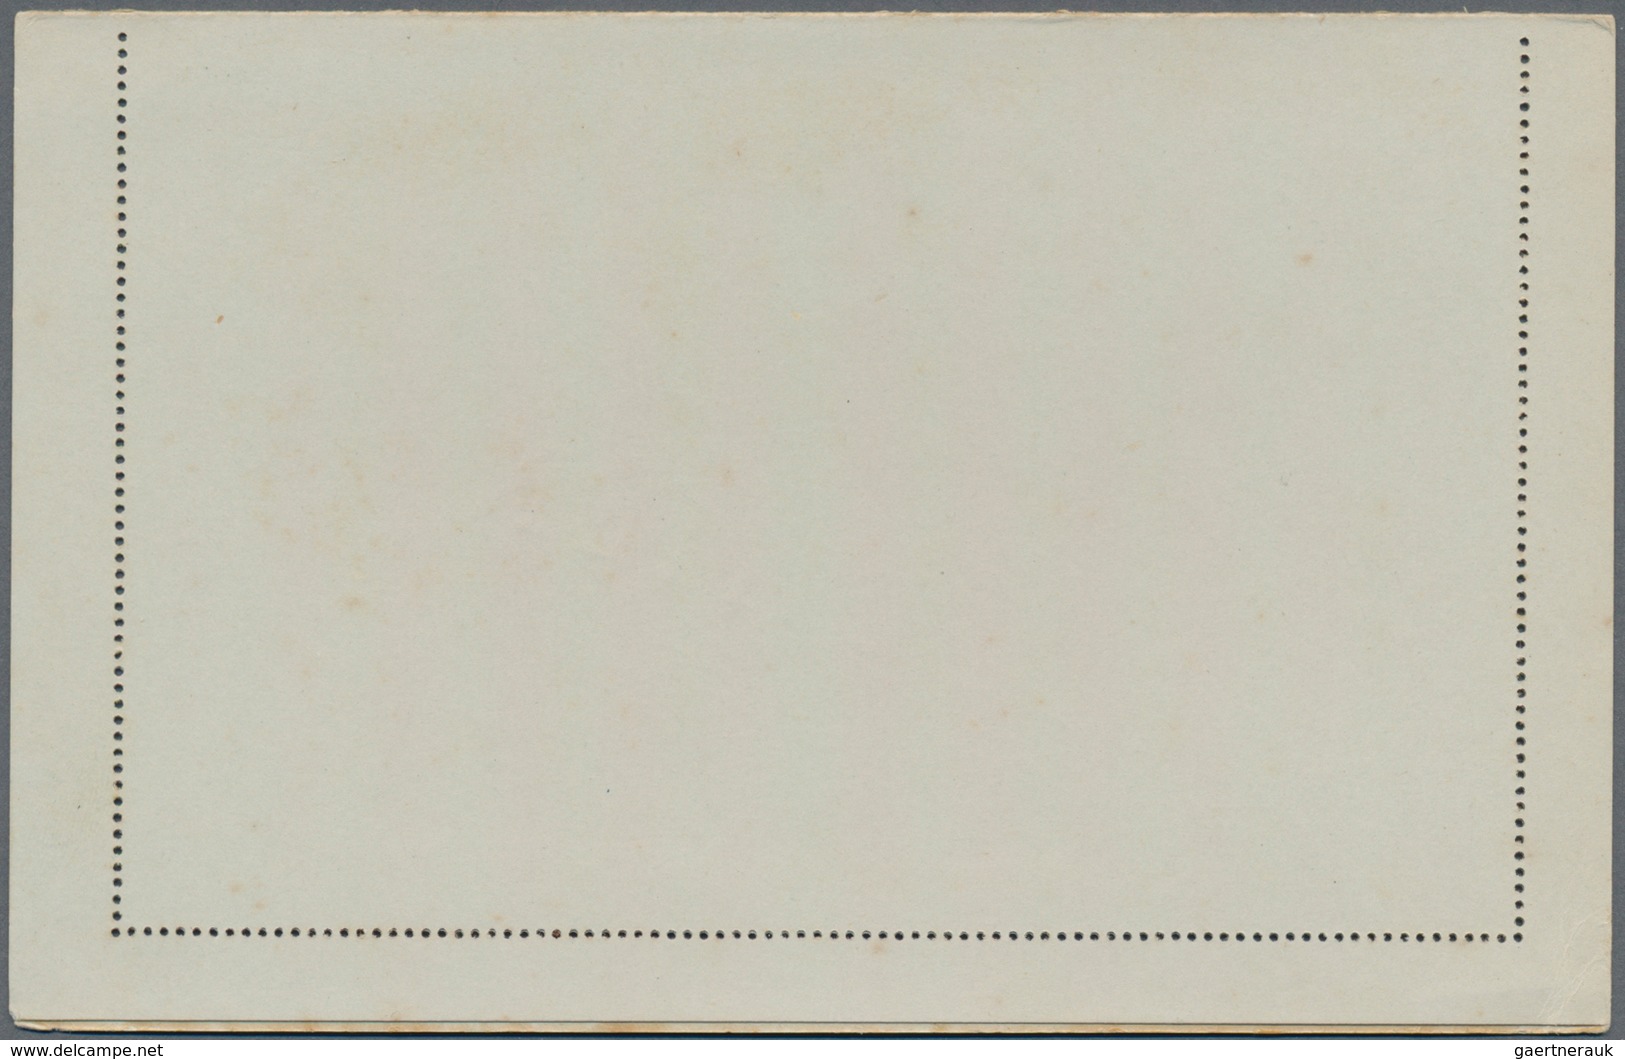 Palästina: 1927, 4 M, 7 M, 8 M Postal Stationery Card + 5 M Letter Card All With Overprint "SPECIMEN - Palästina